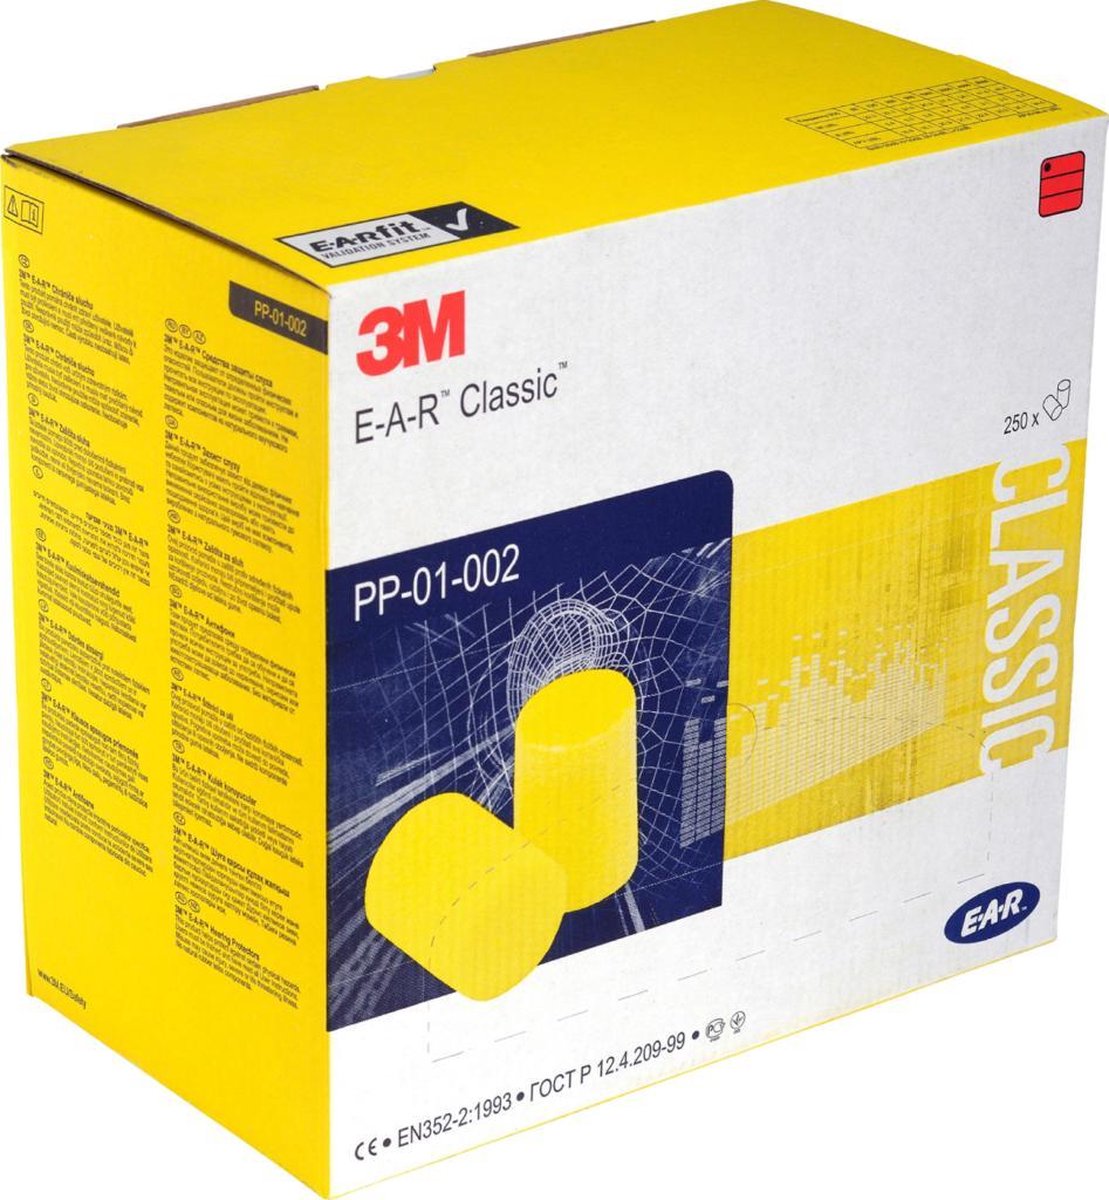 Oordoppen 3M E-A-R Classic geel (250 paar) | bol.com